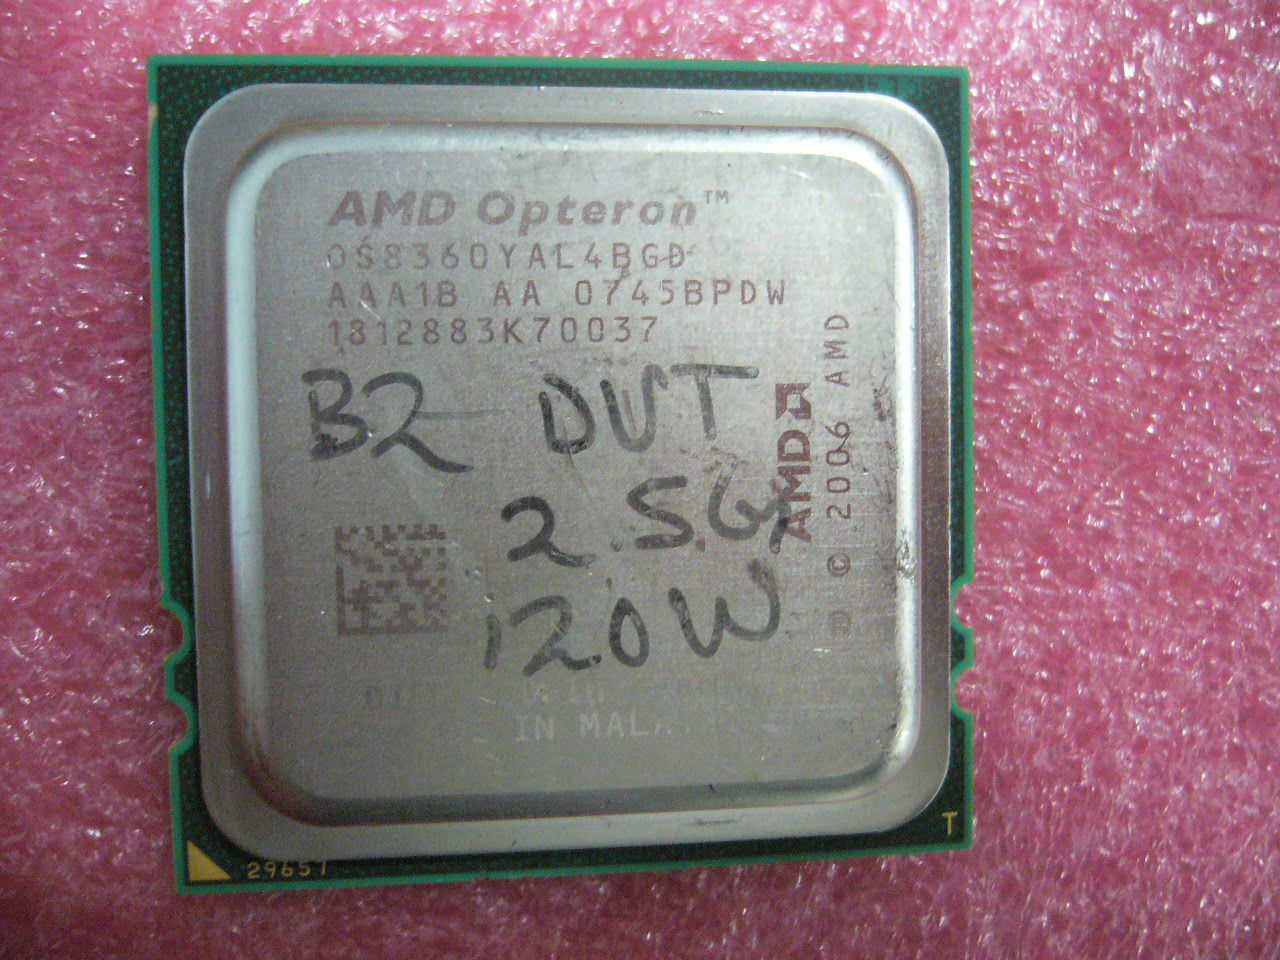 QTY 1x AMD Opteron 8360 SE 2.5 GHz Quad-Core (OS8360YAL4BGD) CPU Socket F 1207 - Click Image to Close